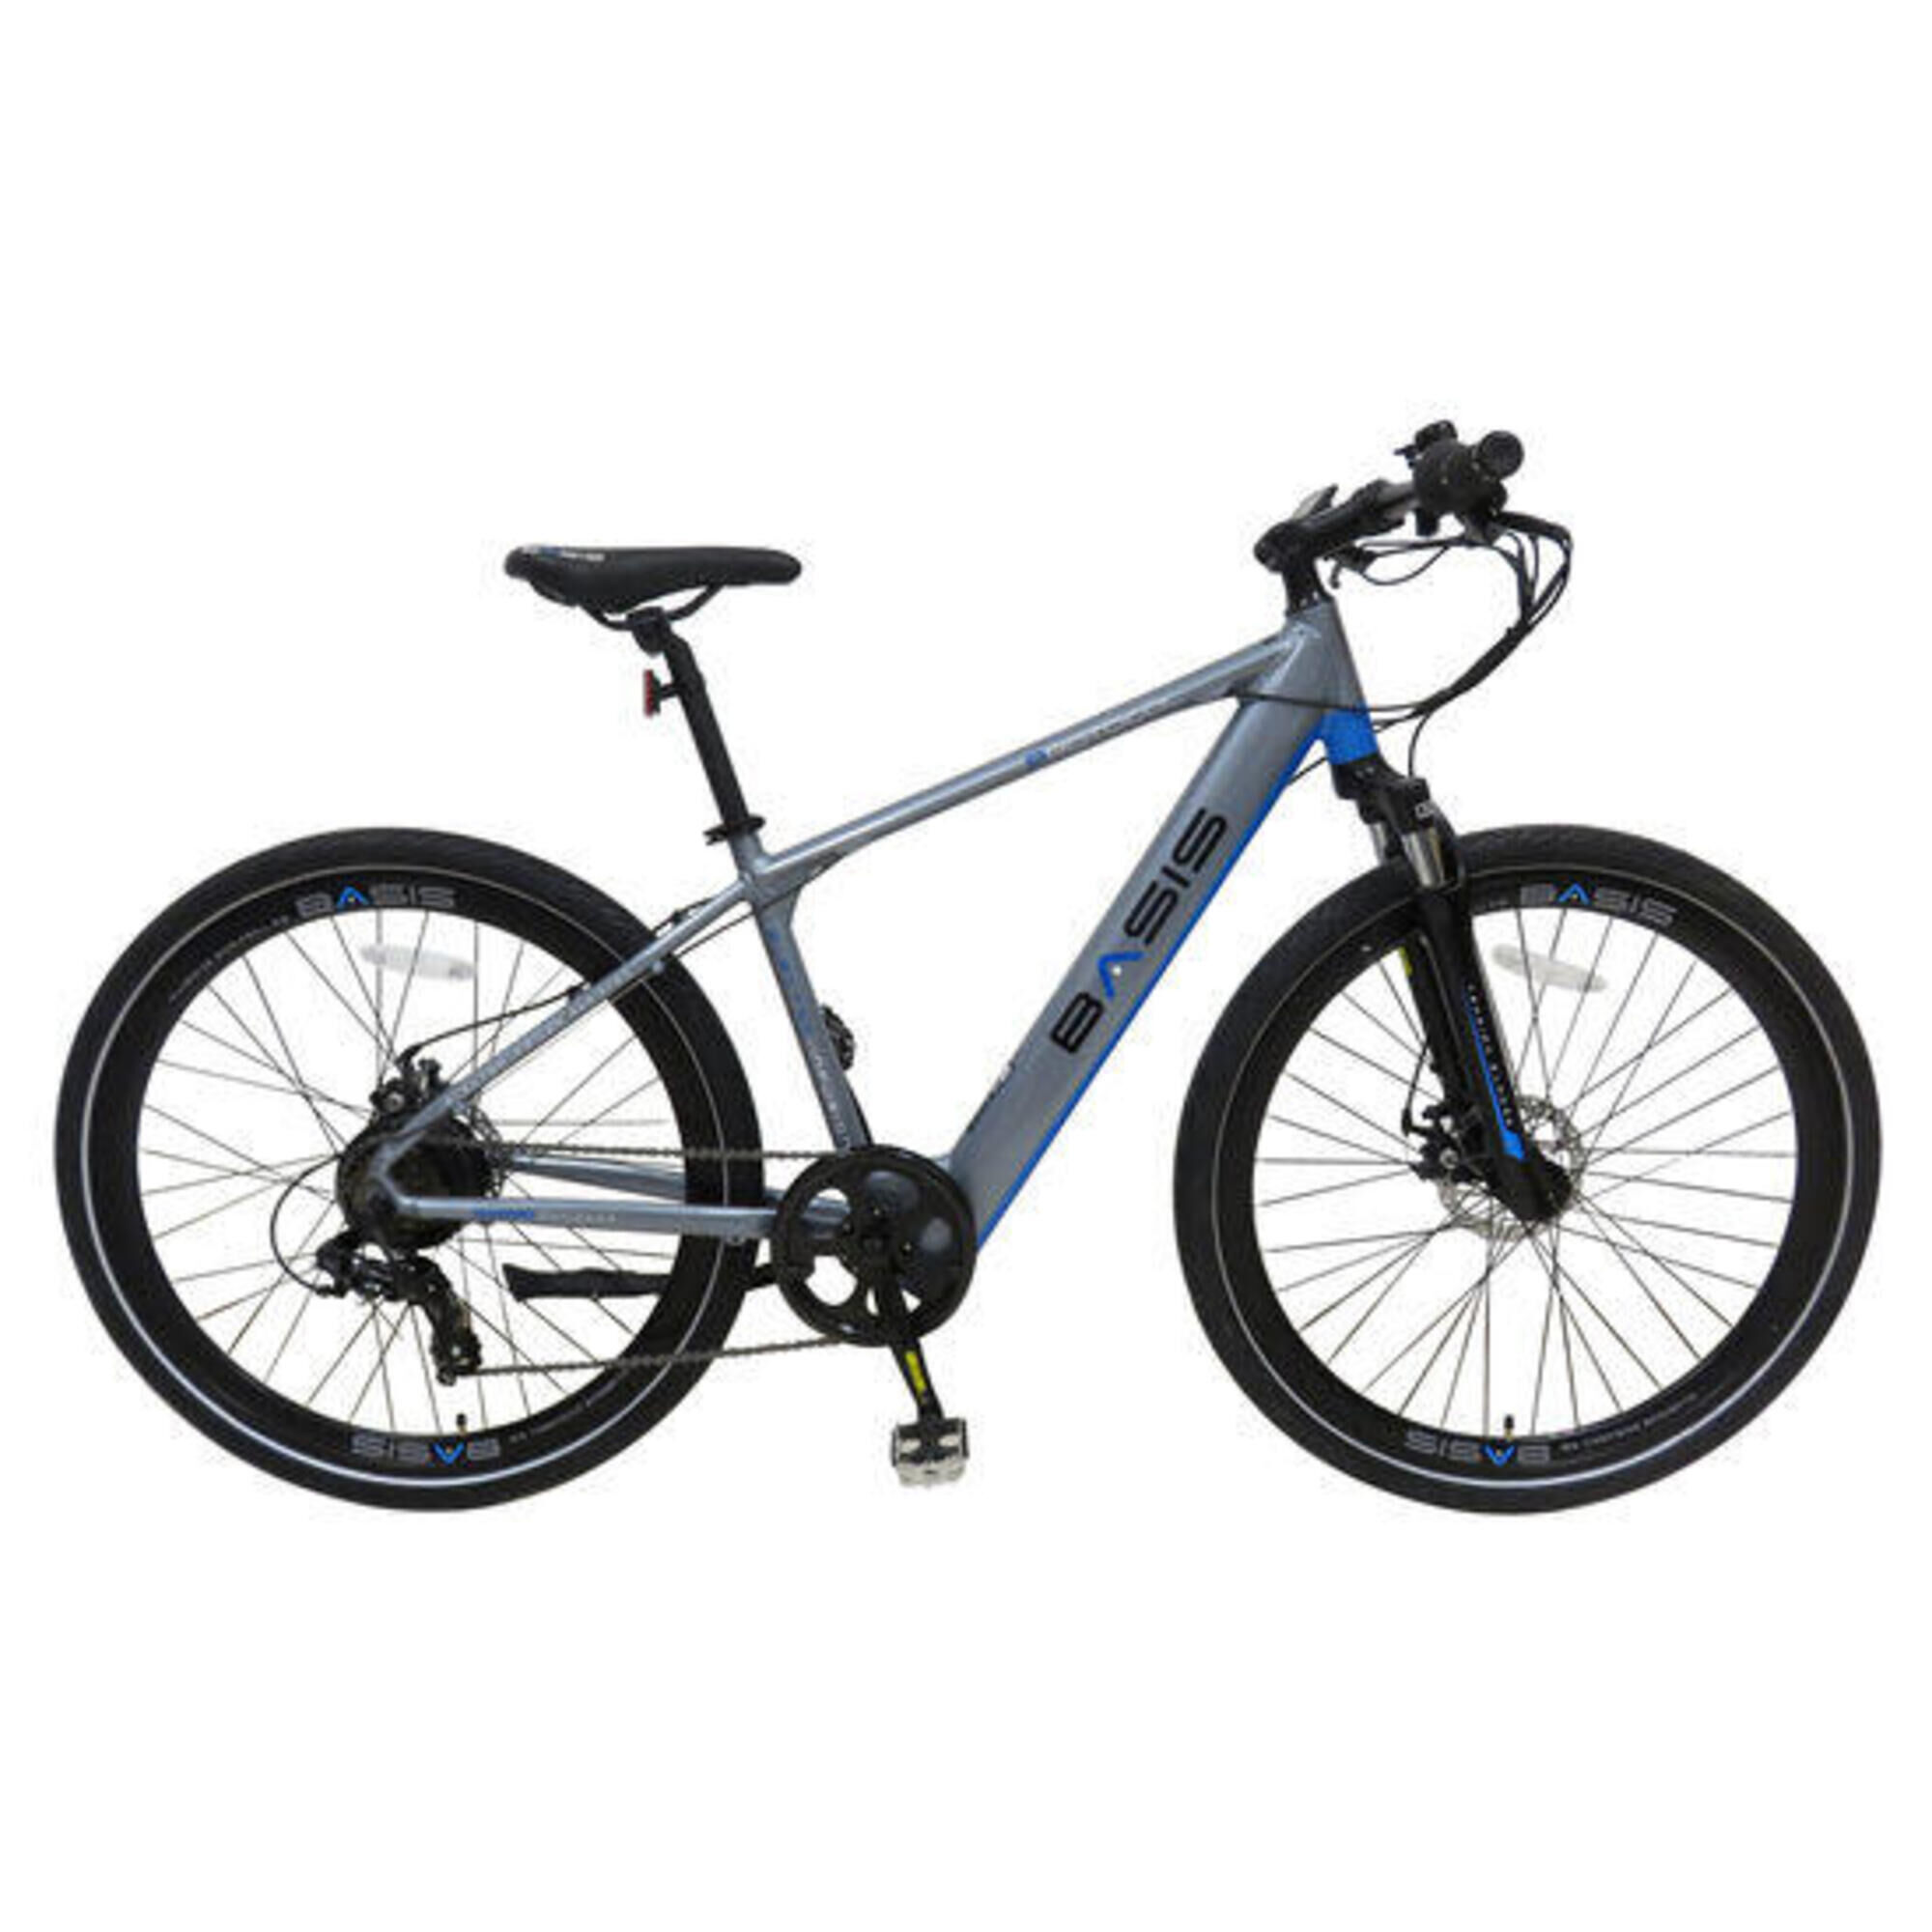 BASIS Basis Protocol Hybrid Electric Bike, 7Ah, 700c Wheel - Graphite Blue